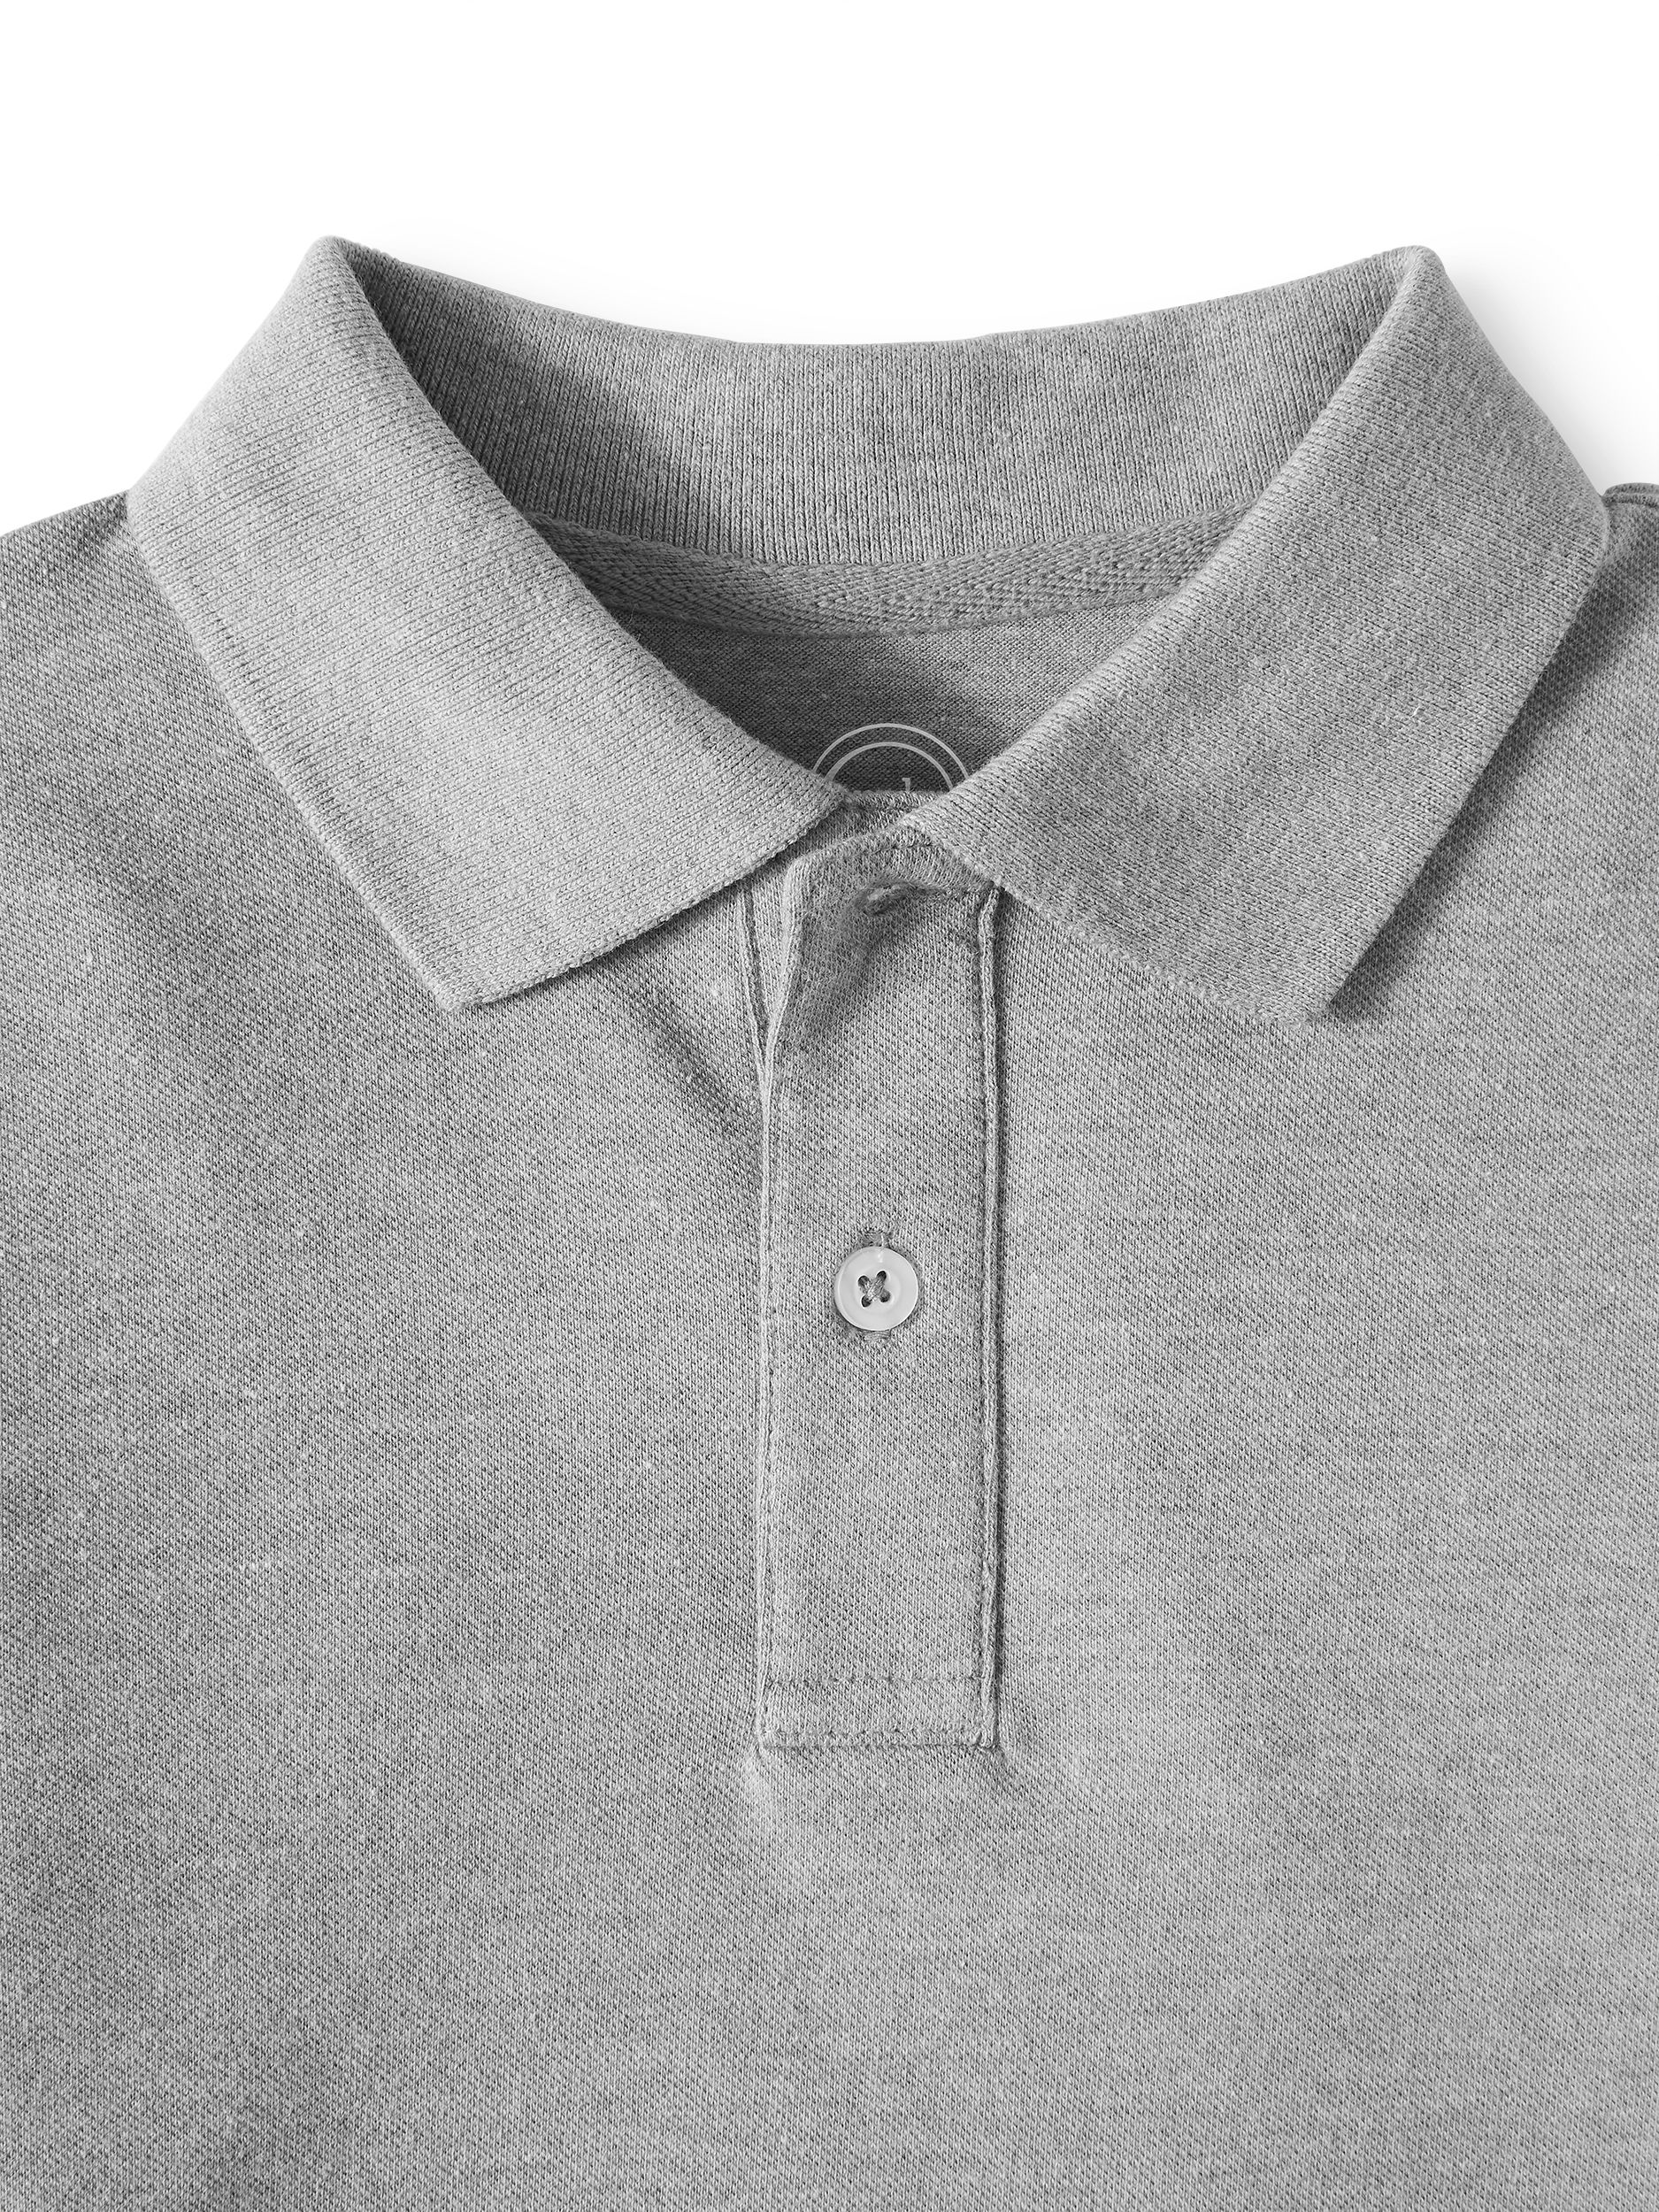 Wonder Nation Boys School Uniform Short Sleeve Pique Polo Shirts, 2-Pack Value Bundle, Sizes 4-18 & Husky - image 3 of 3